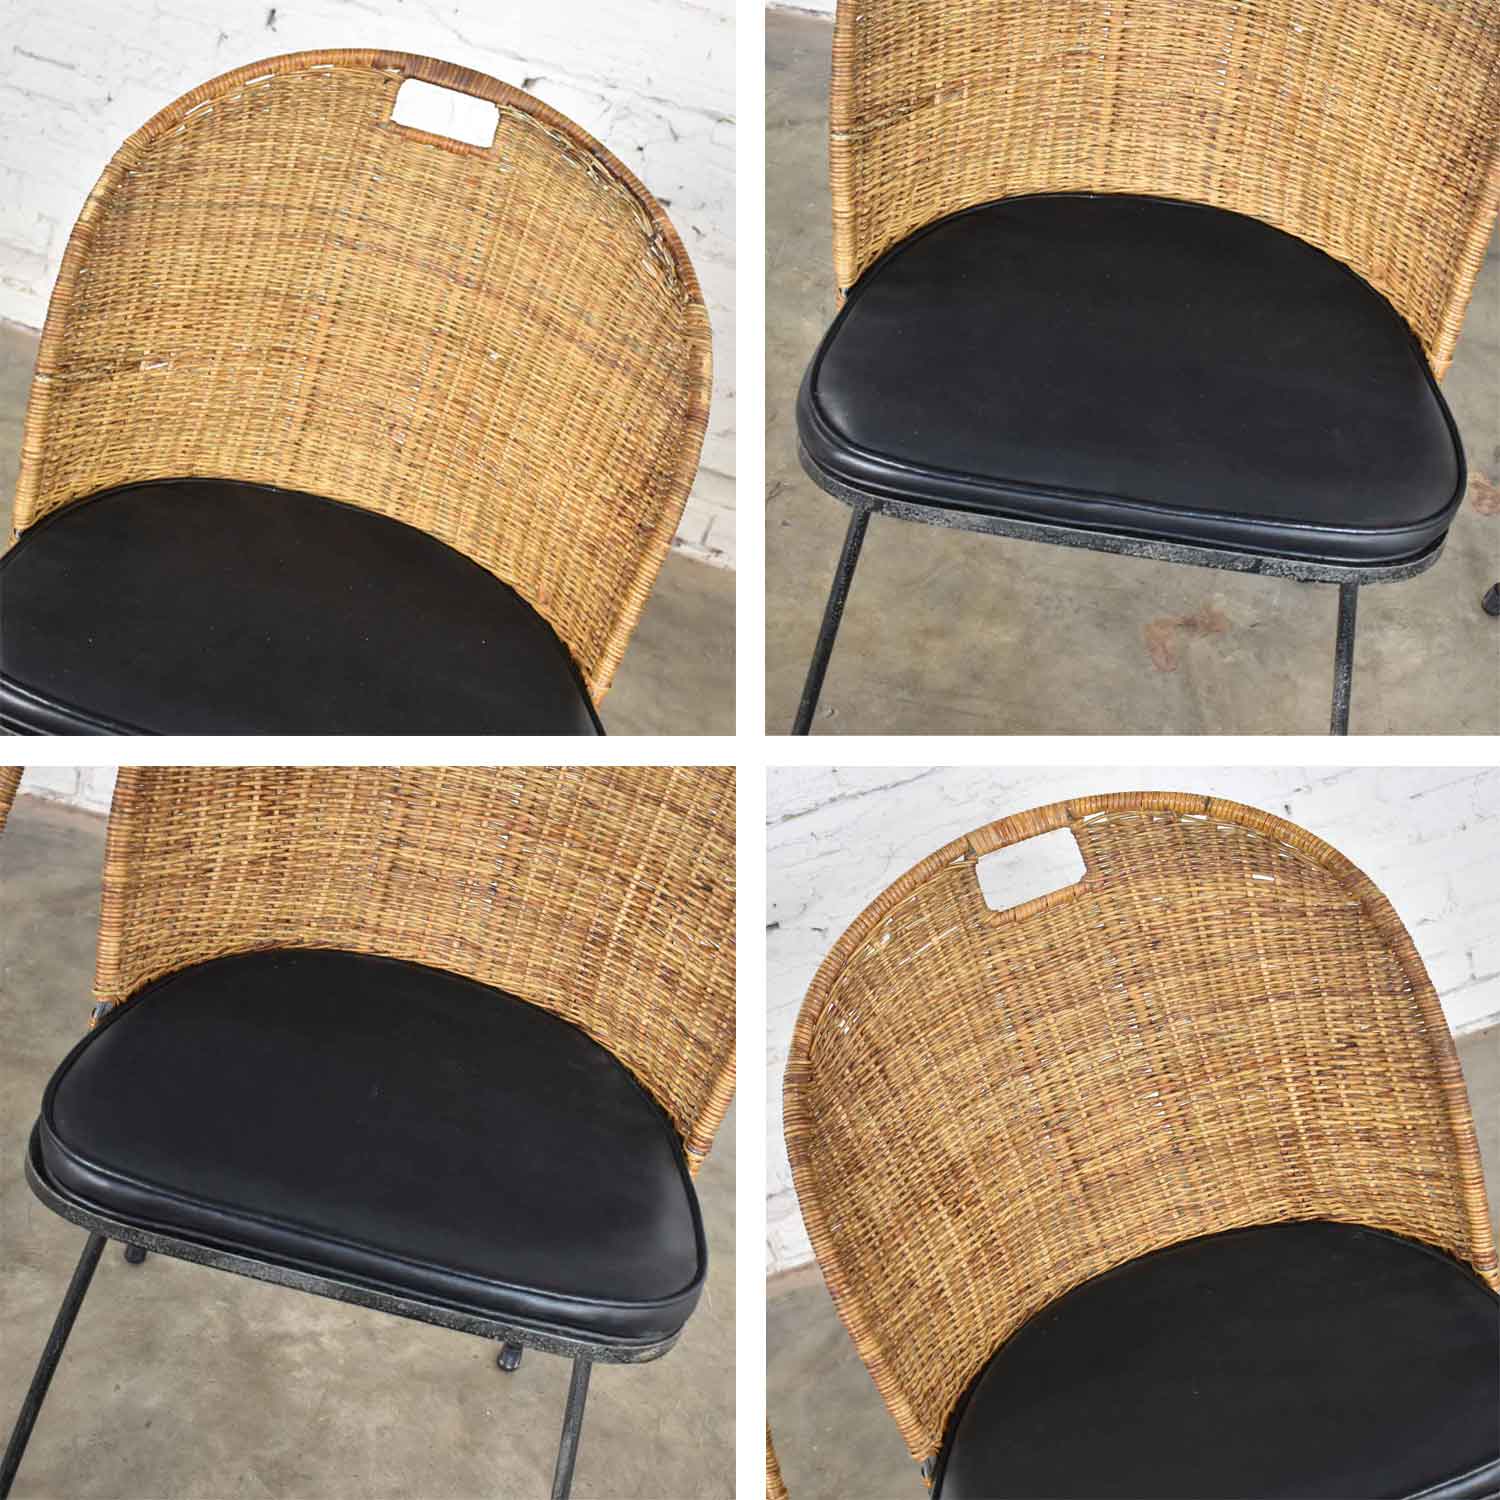 Mid Century Modern Iron & Wicker Pair of Neva-Rust Chairs by Maurizio Tempestini for Salterini